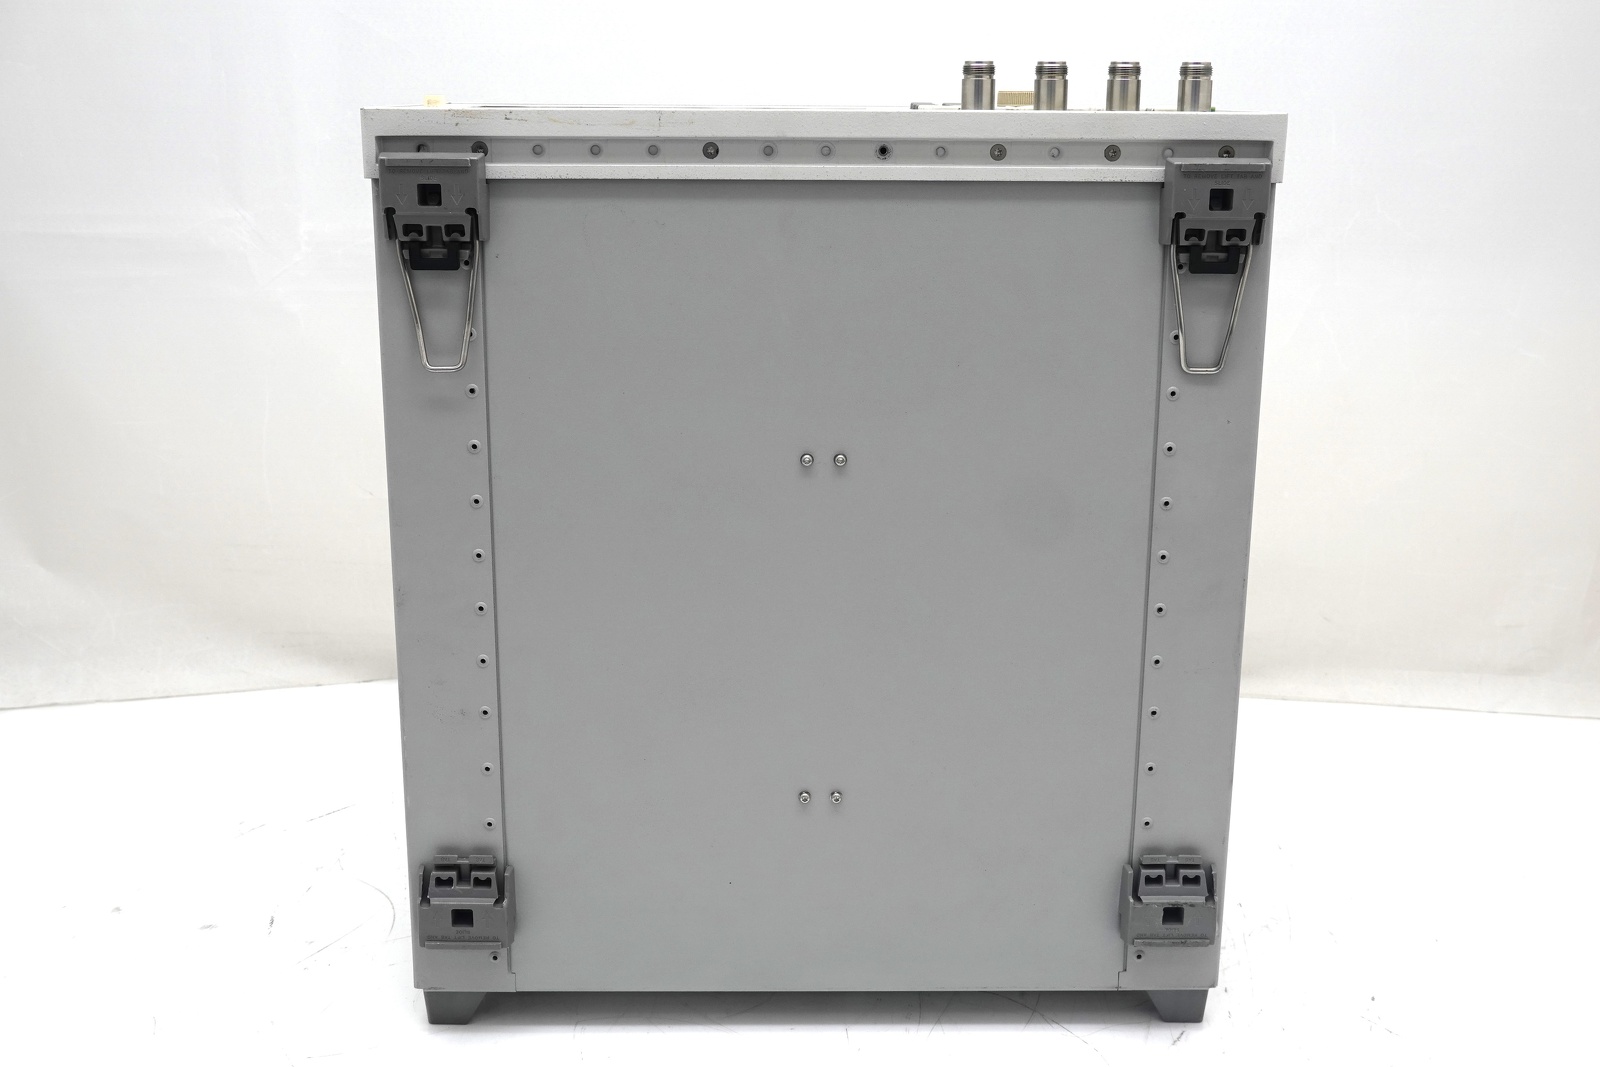 Keysight E5071B-414 4-ports / -50 to 10 dBm